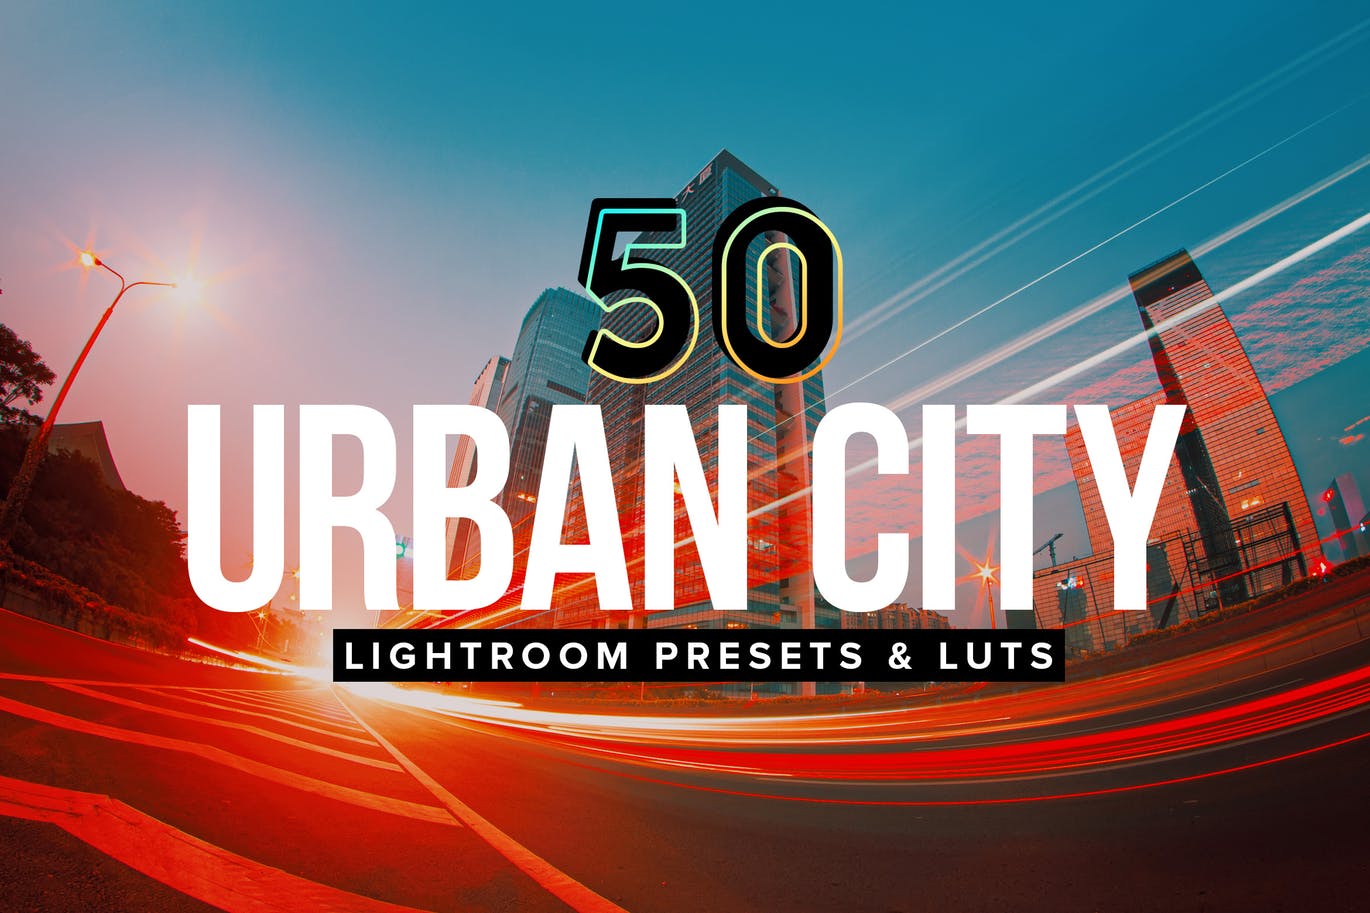 50款城市夜景照片LR调色预设合集 50 Urban City Lightroom Presets and LUTs插图